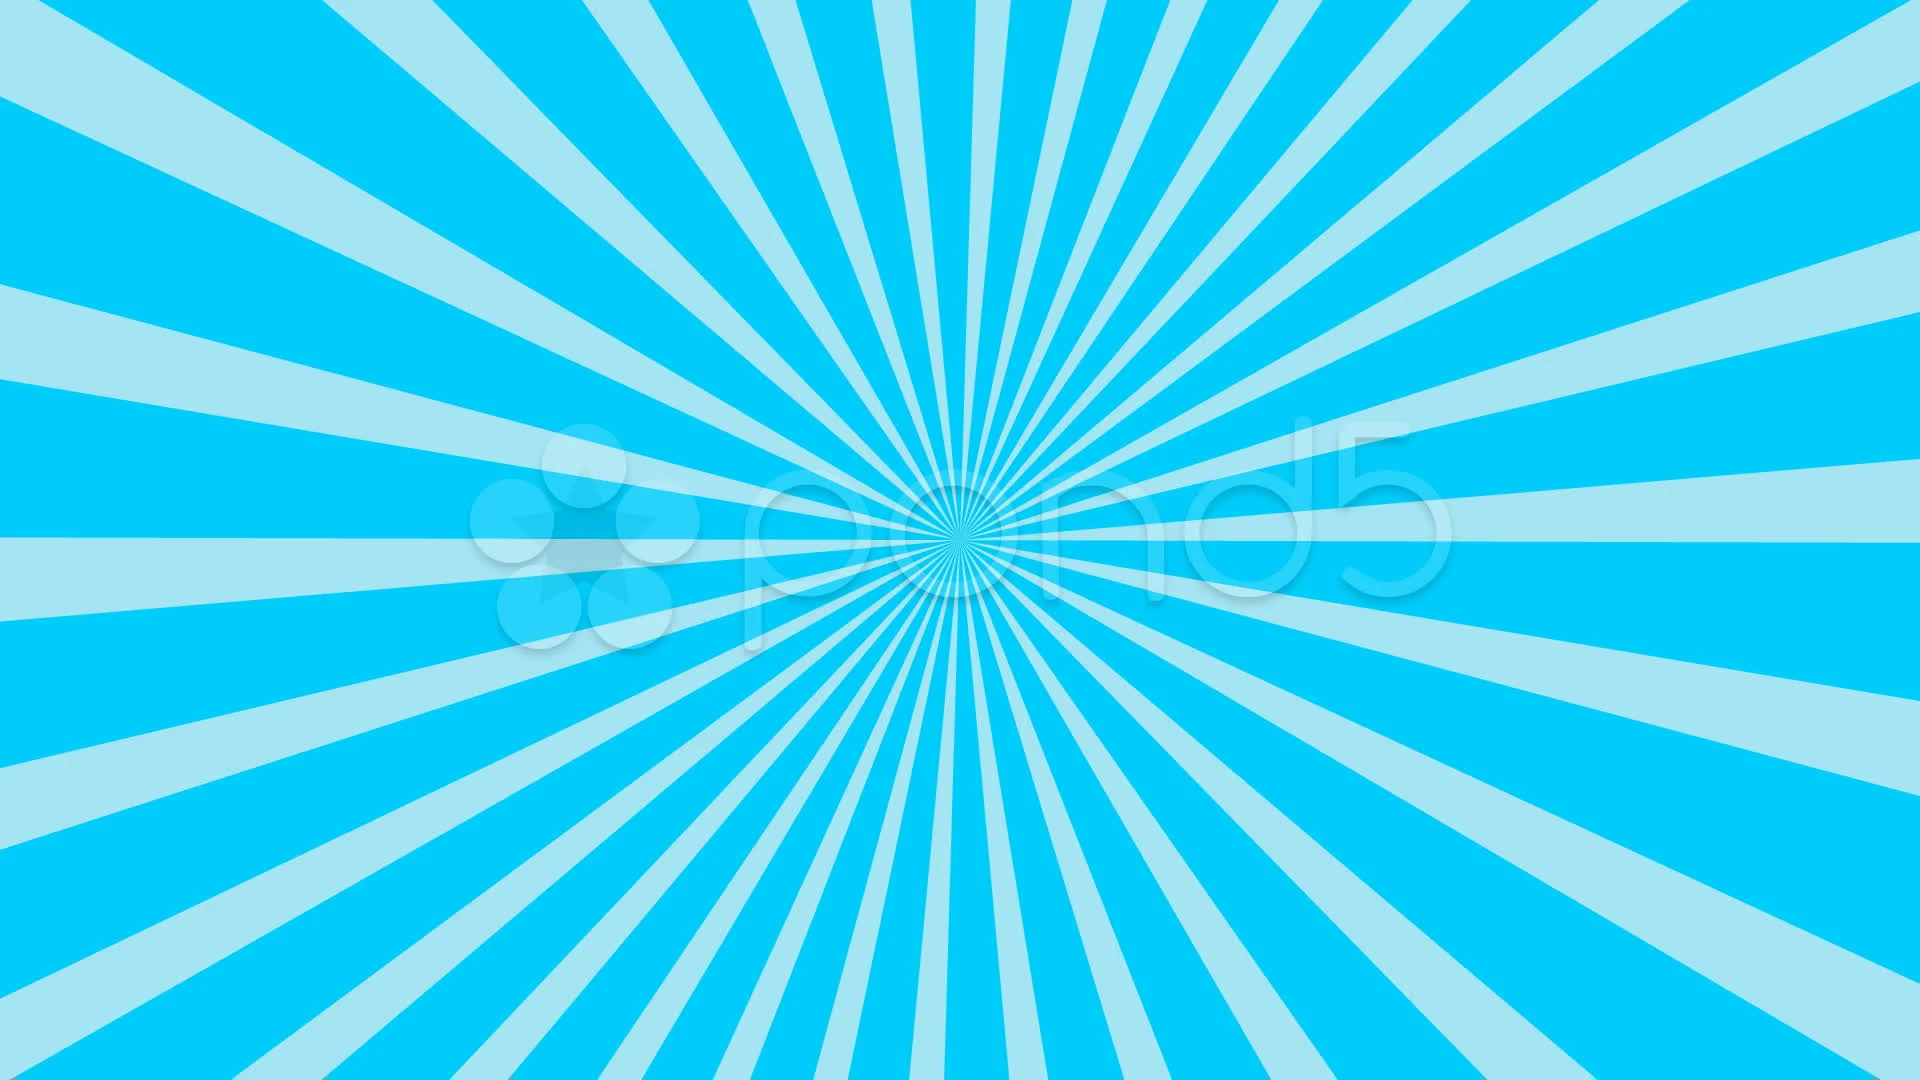 Blue Sunburst Background Animation | Stock Video | Pond5